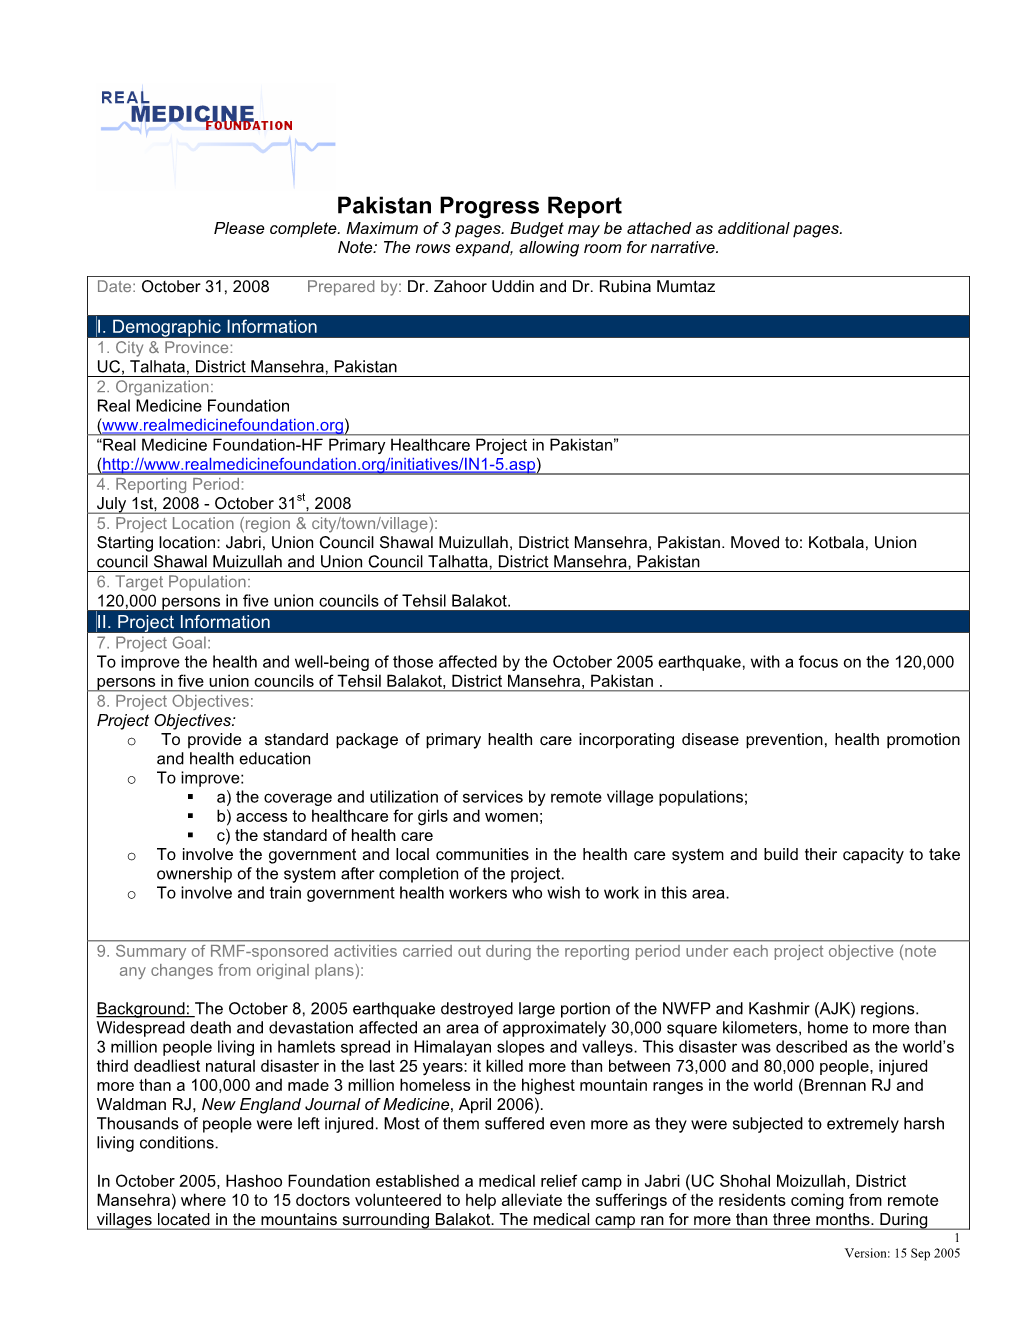 Pakistan Progress Report Please Complete